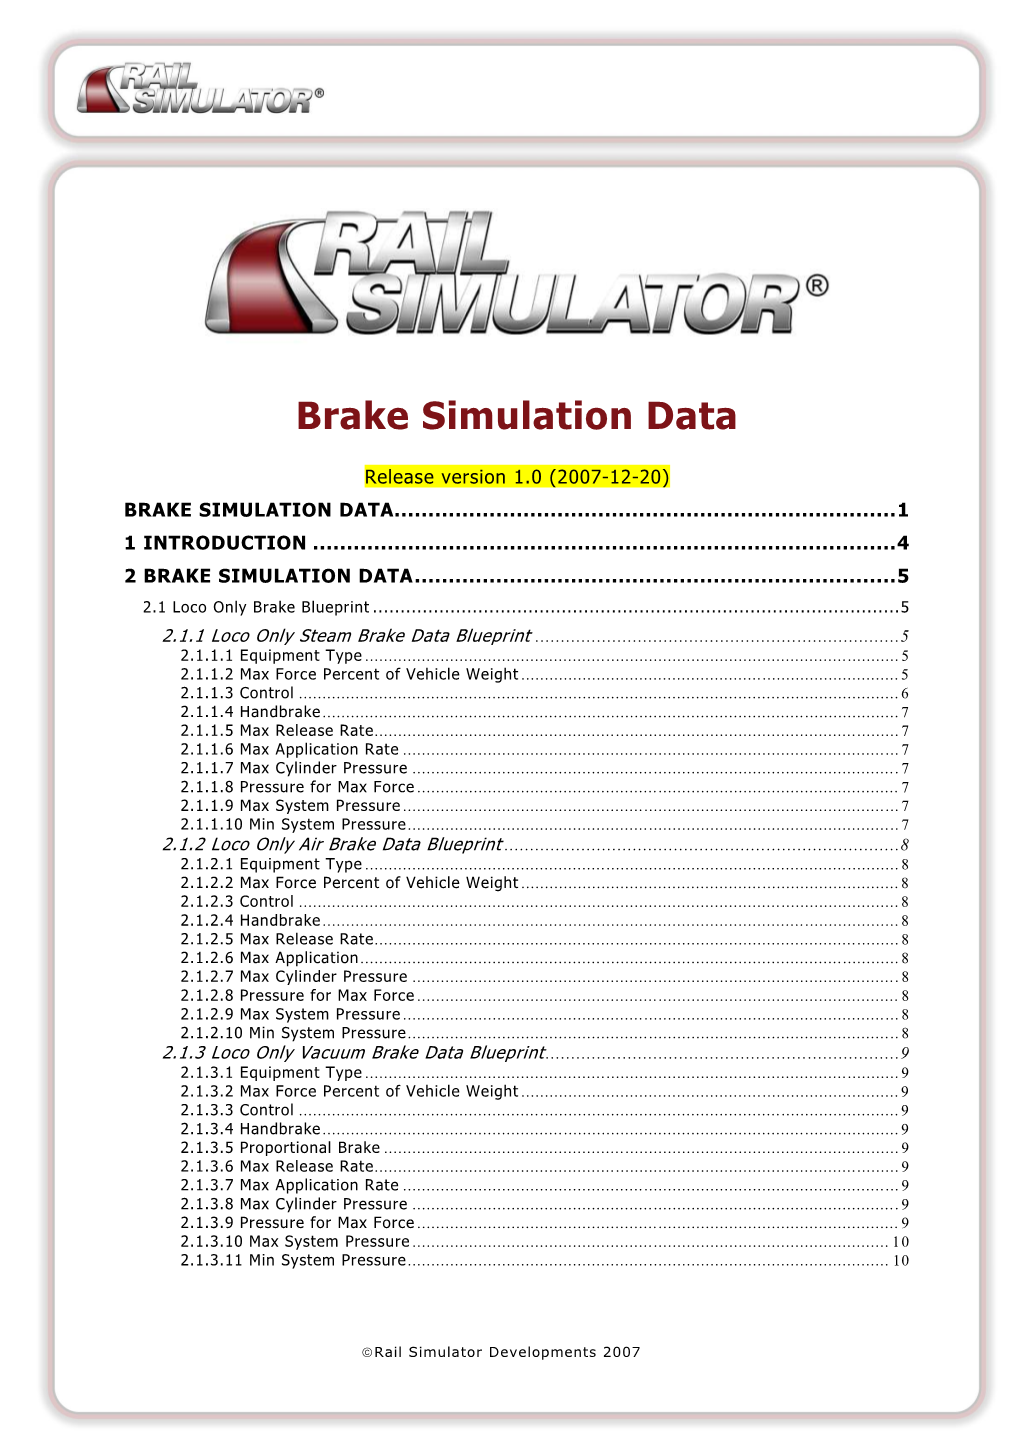 2.02 Brake Simulation Data